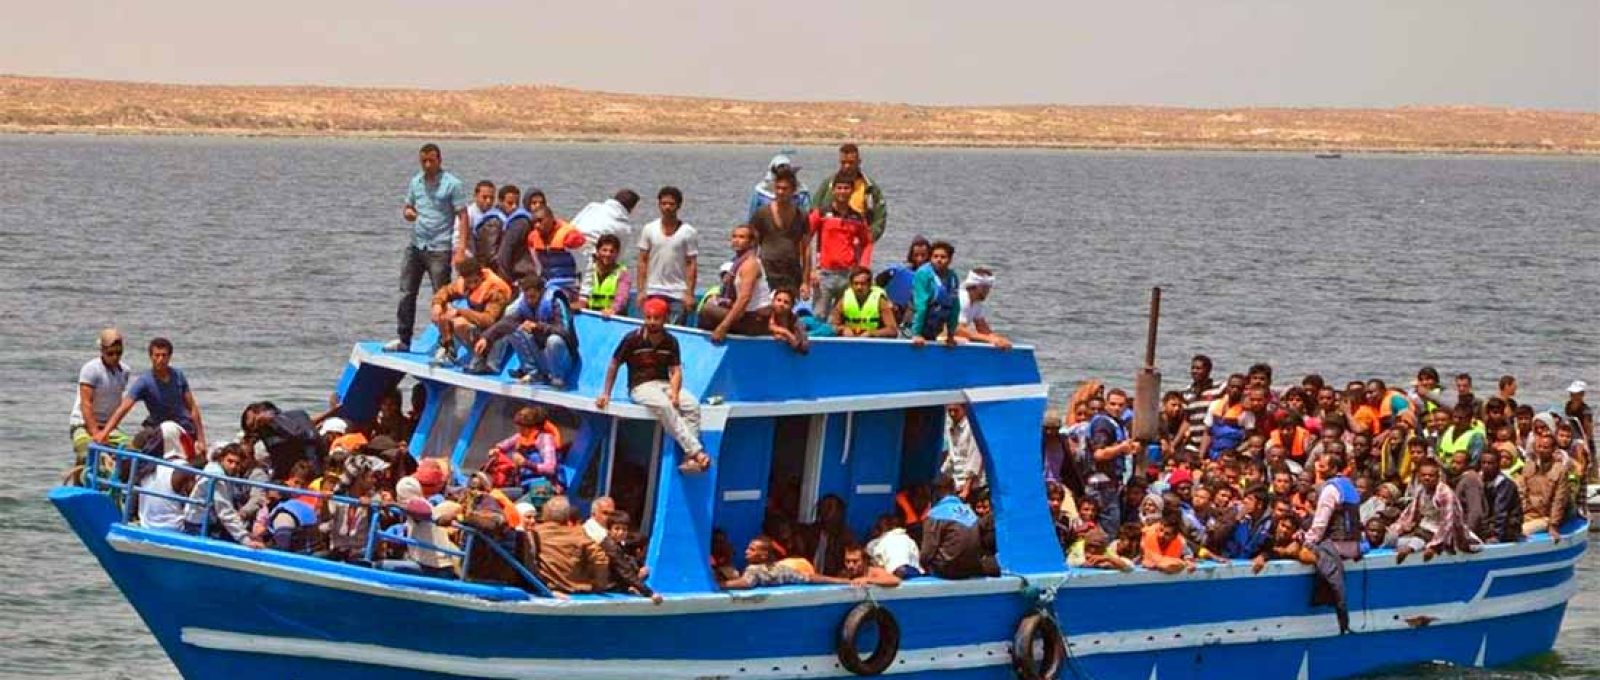 Barco repleto de imigrantes após serem resgatados pela marinha tunisiana na costa perto de Ben Guerdane, Tunísia, 10 de junho de 2015 (Reuters/Stringer).